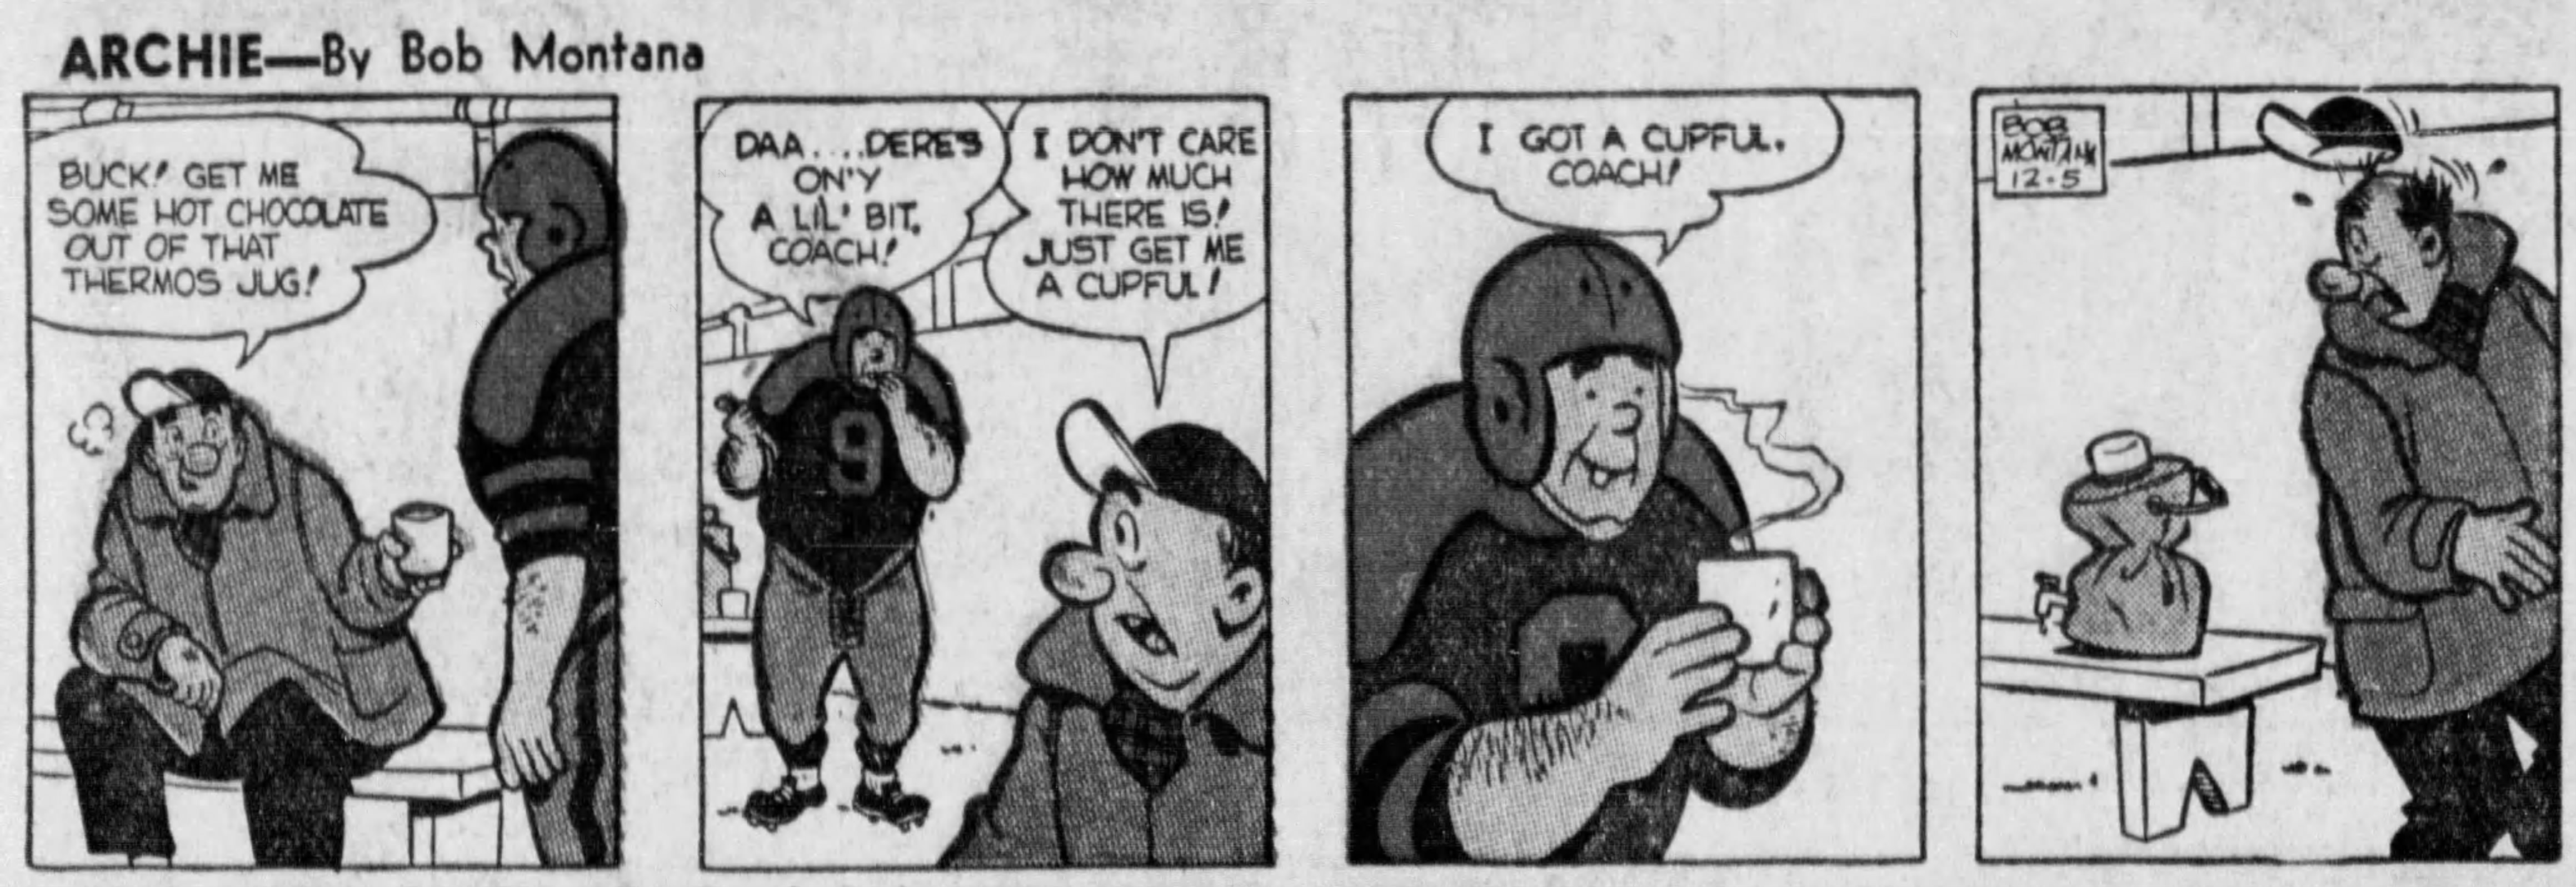 Archie, December 5, 1957